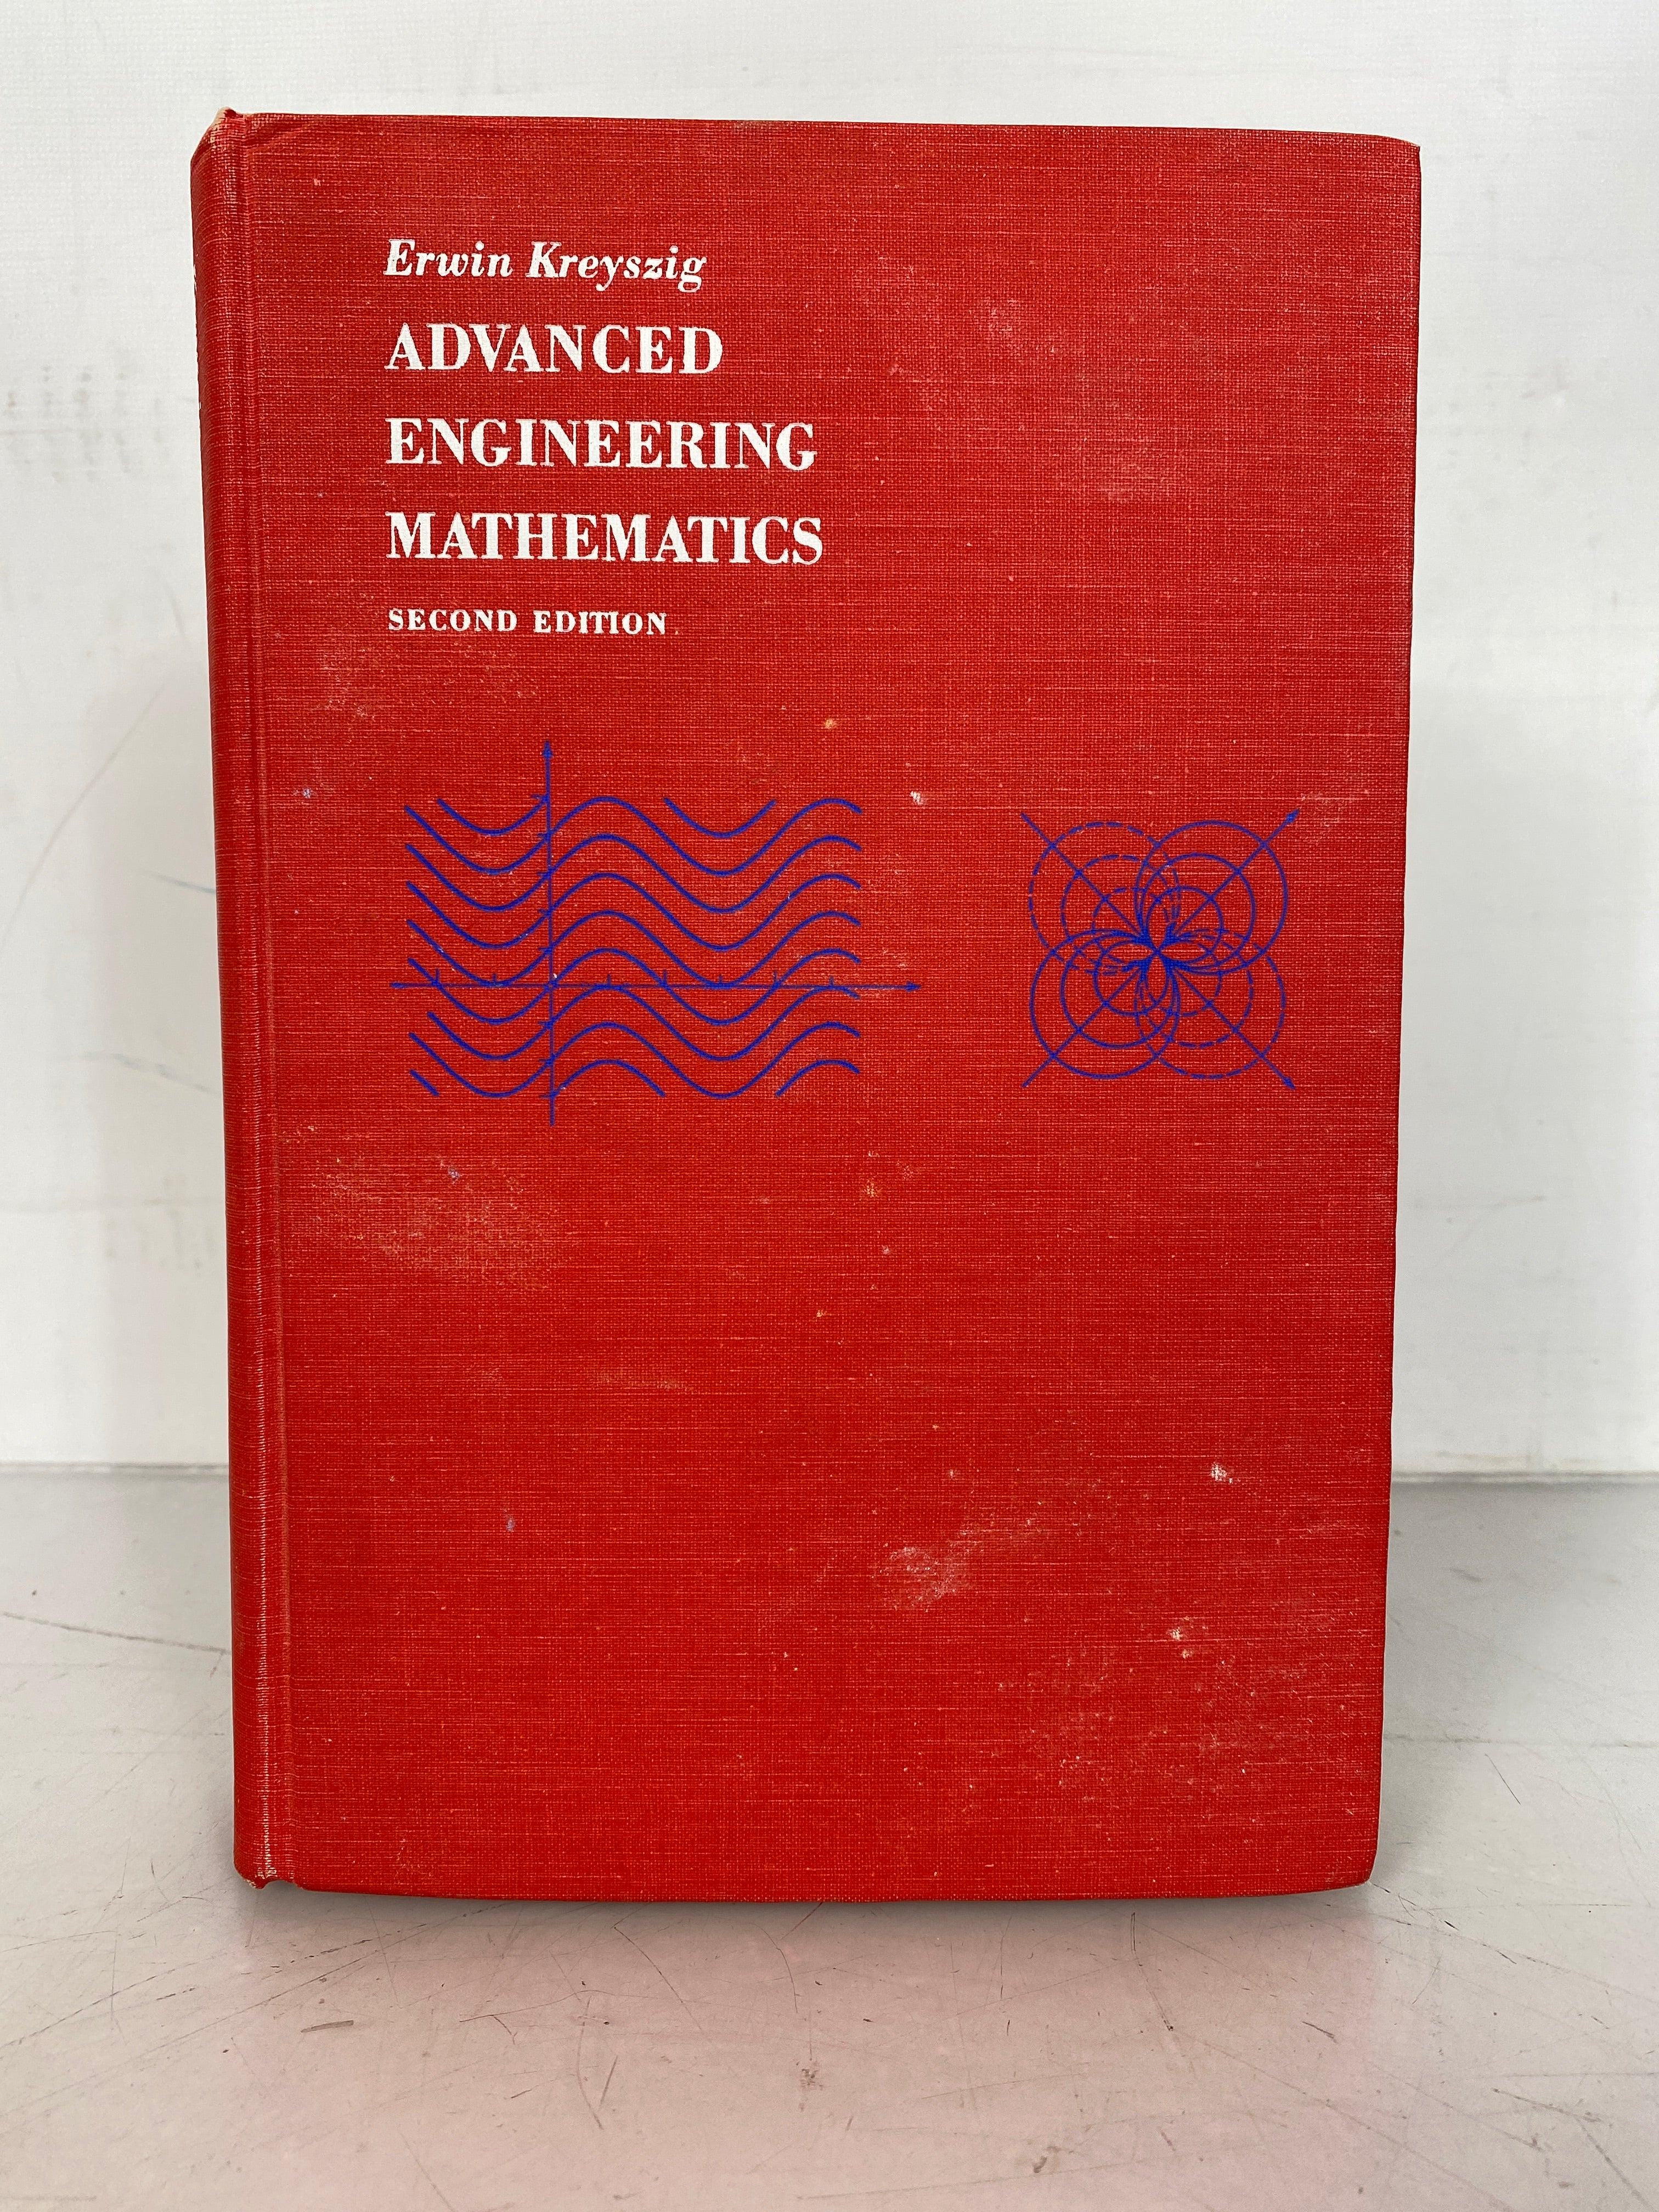 Advanced Engineering Mathematics Second Edition by Erwin Kreyszig 1967 HC